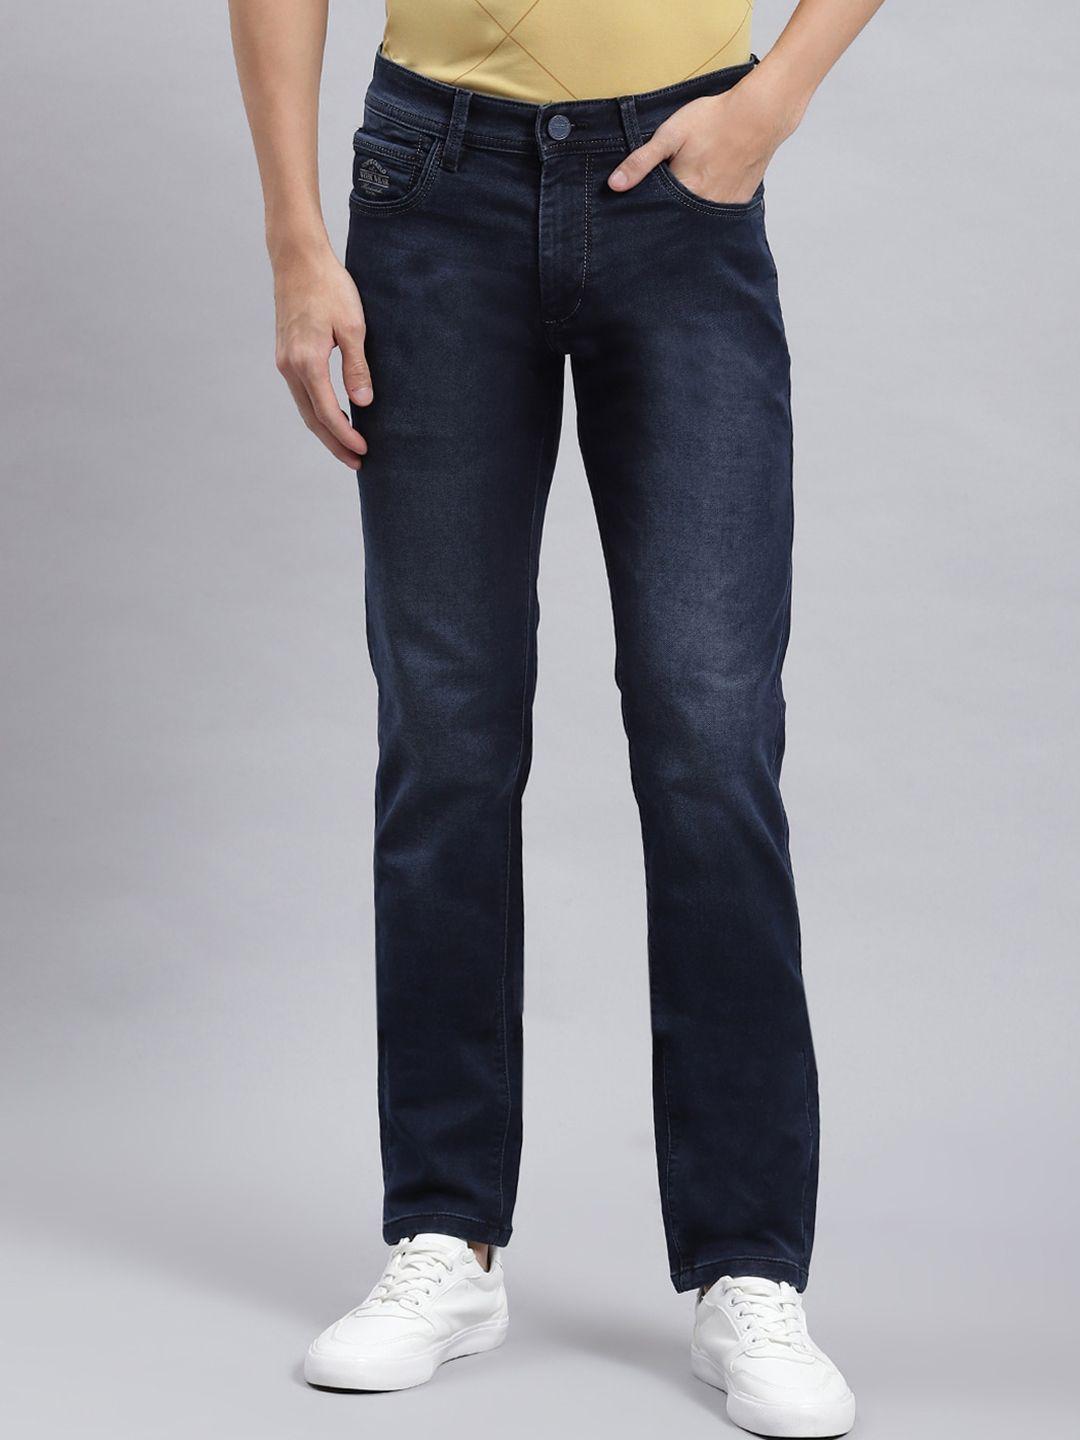 monte carlo men smart slim fit mid-rise light fade jeans